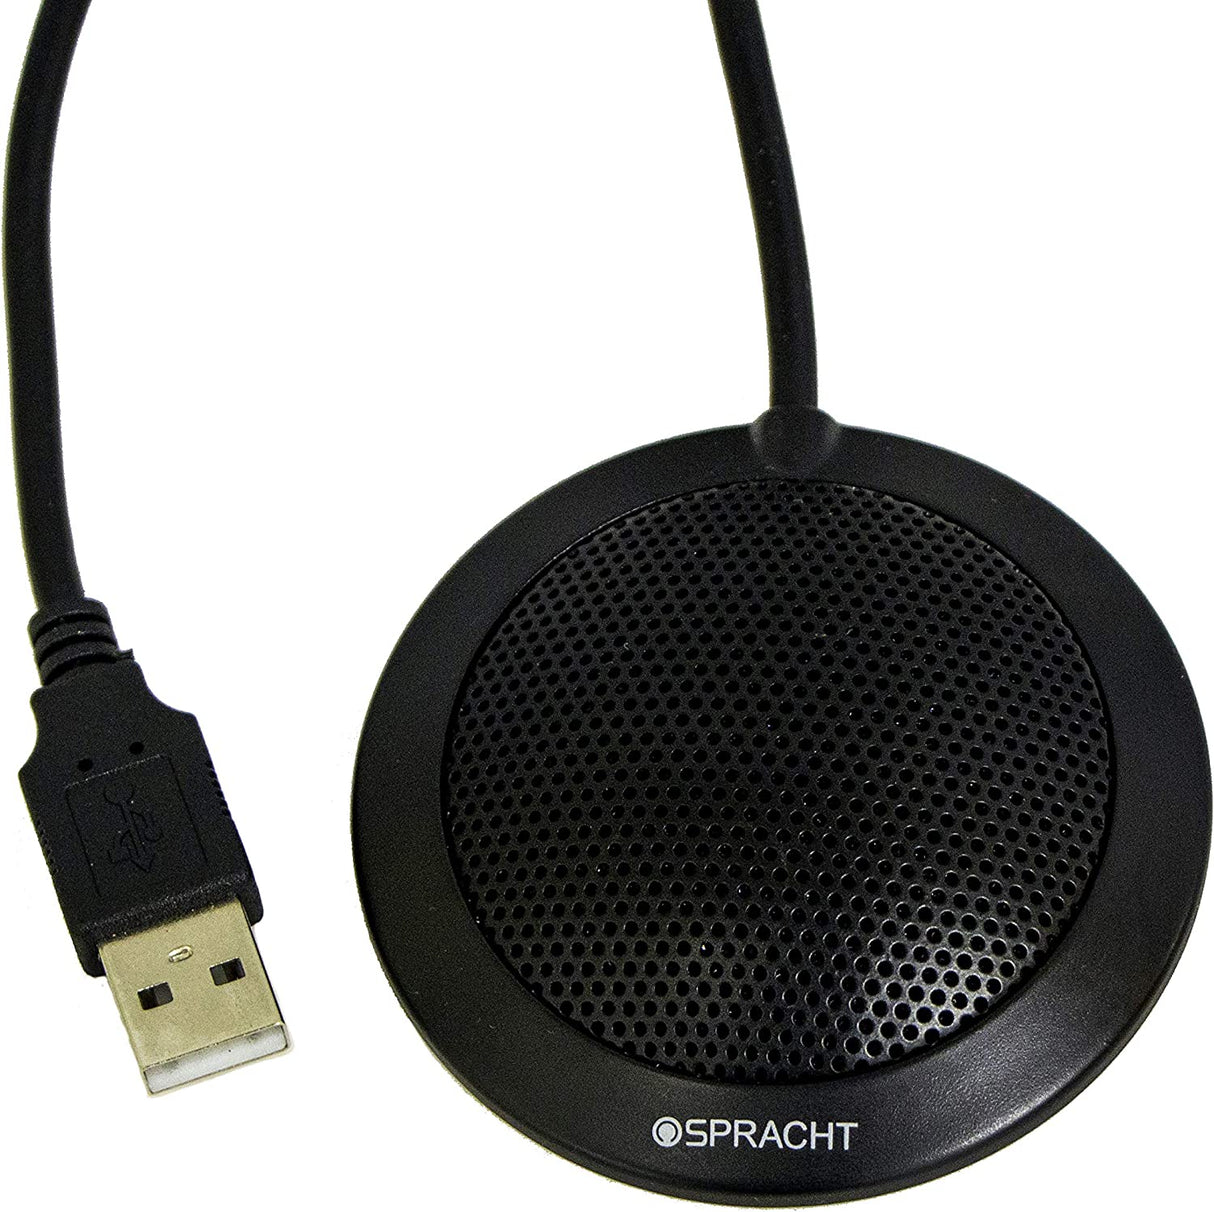 Spracht MIC-2010 Aura USB Mic Digital USB Microphone, Black